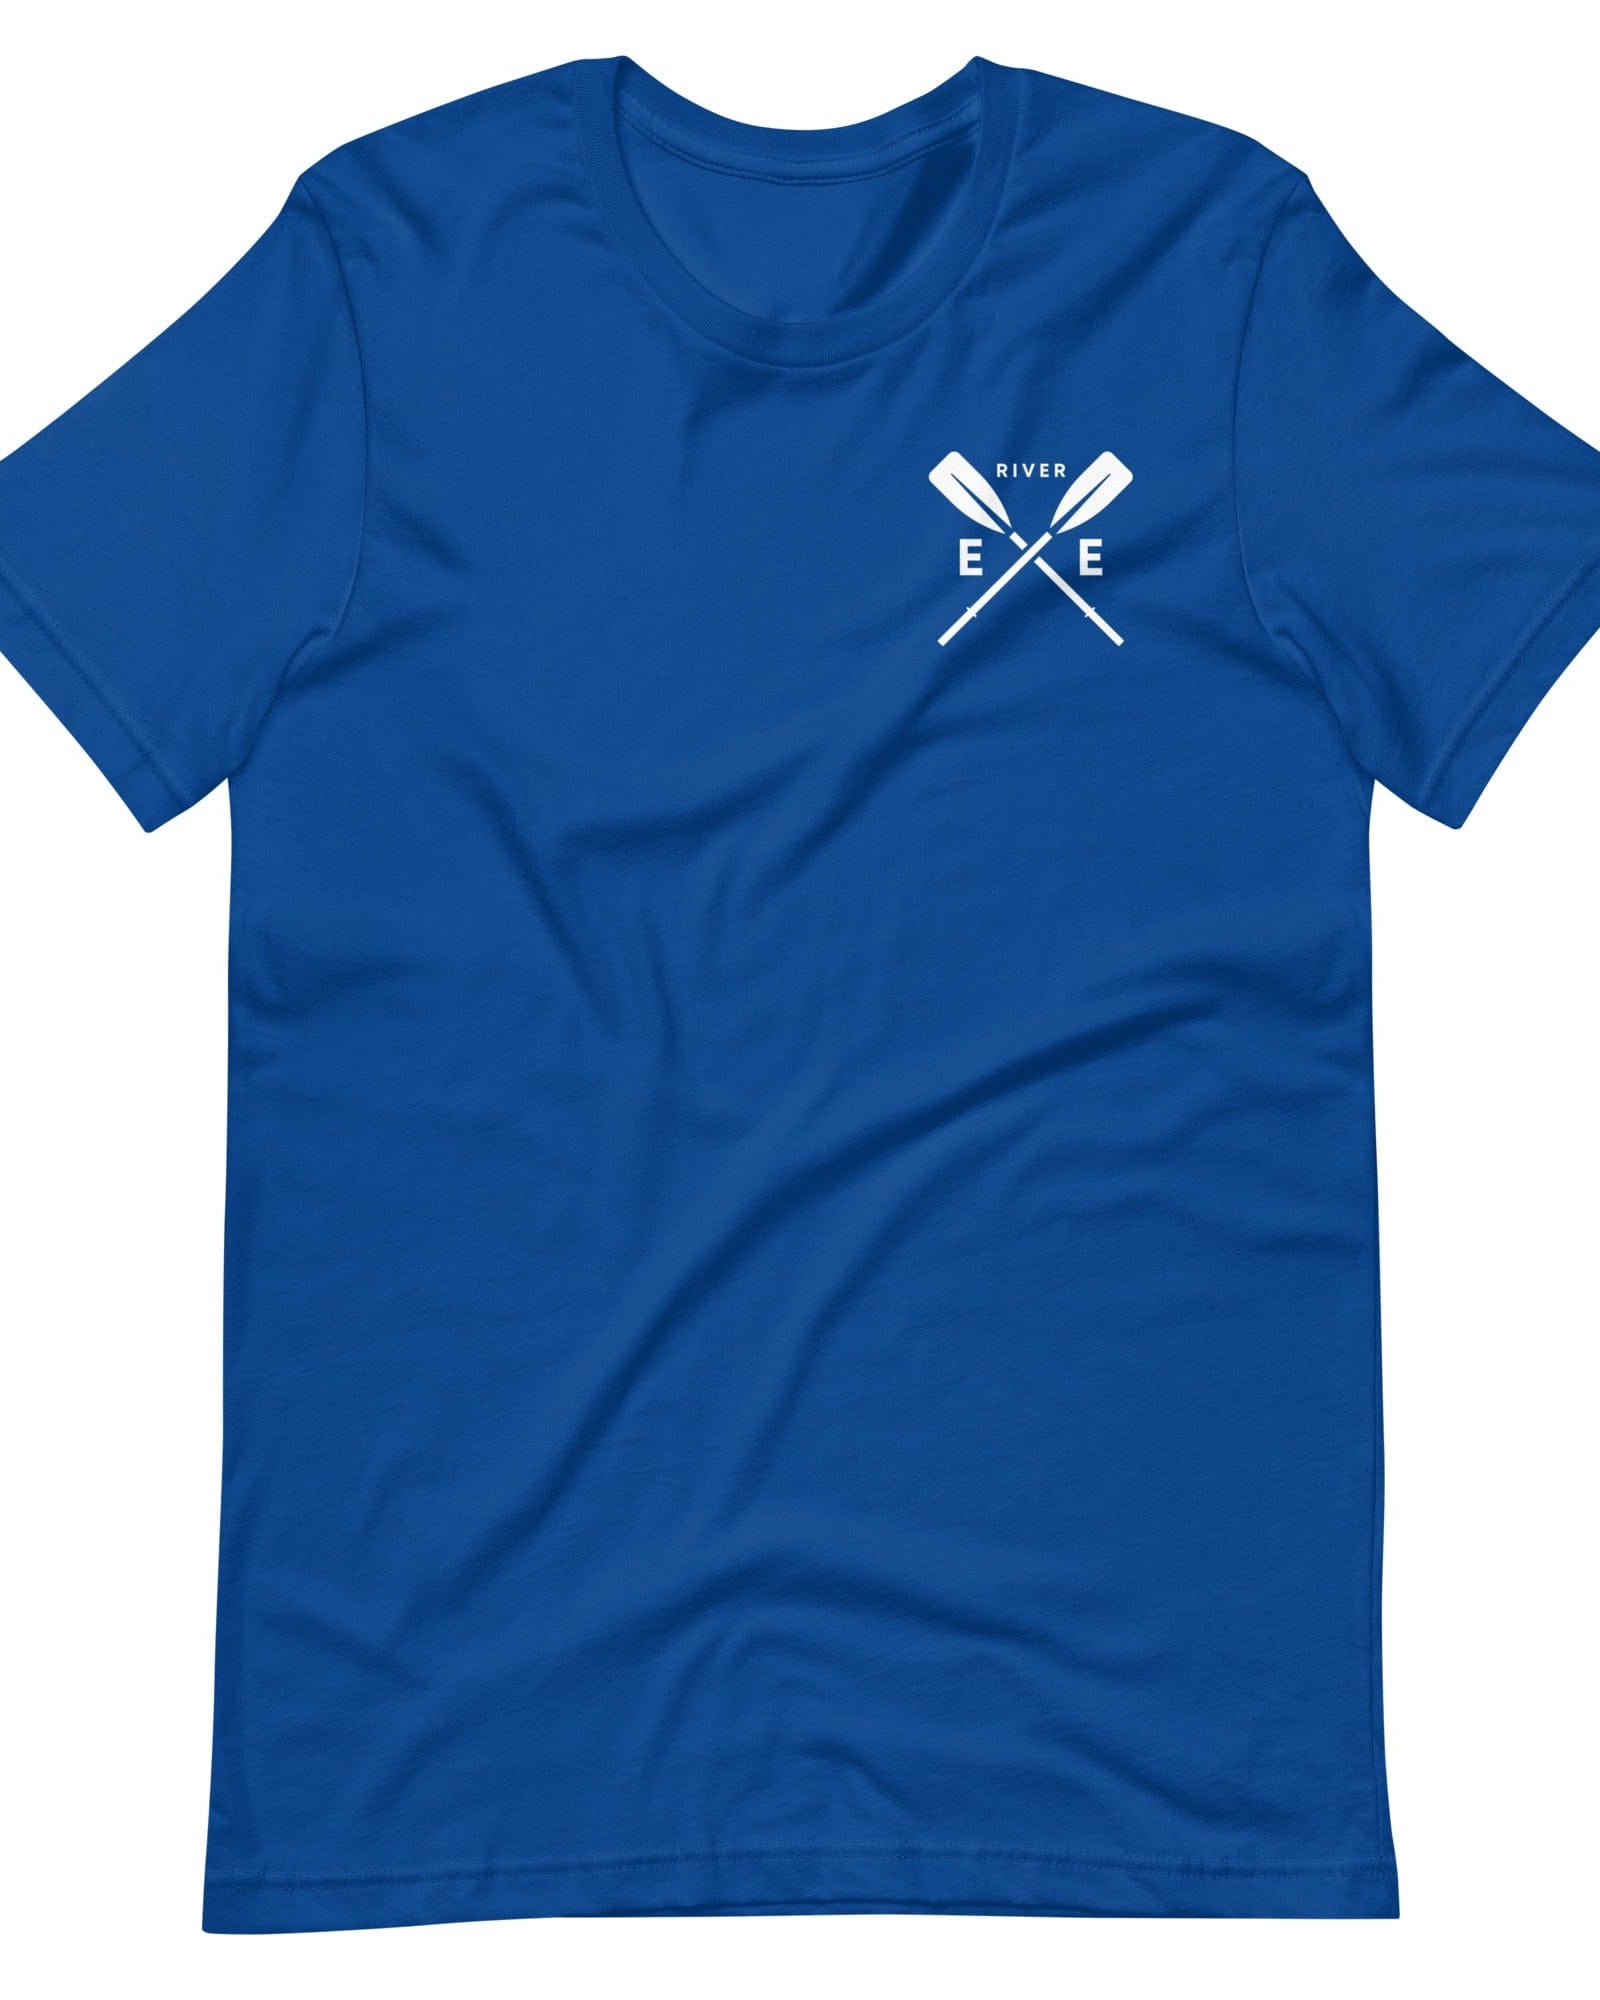 River Exe T-shirt | Exeter Gift Shop True Royal / S Shirts & Tops Jolly & Goode